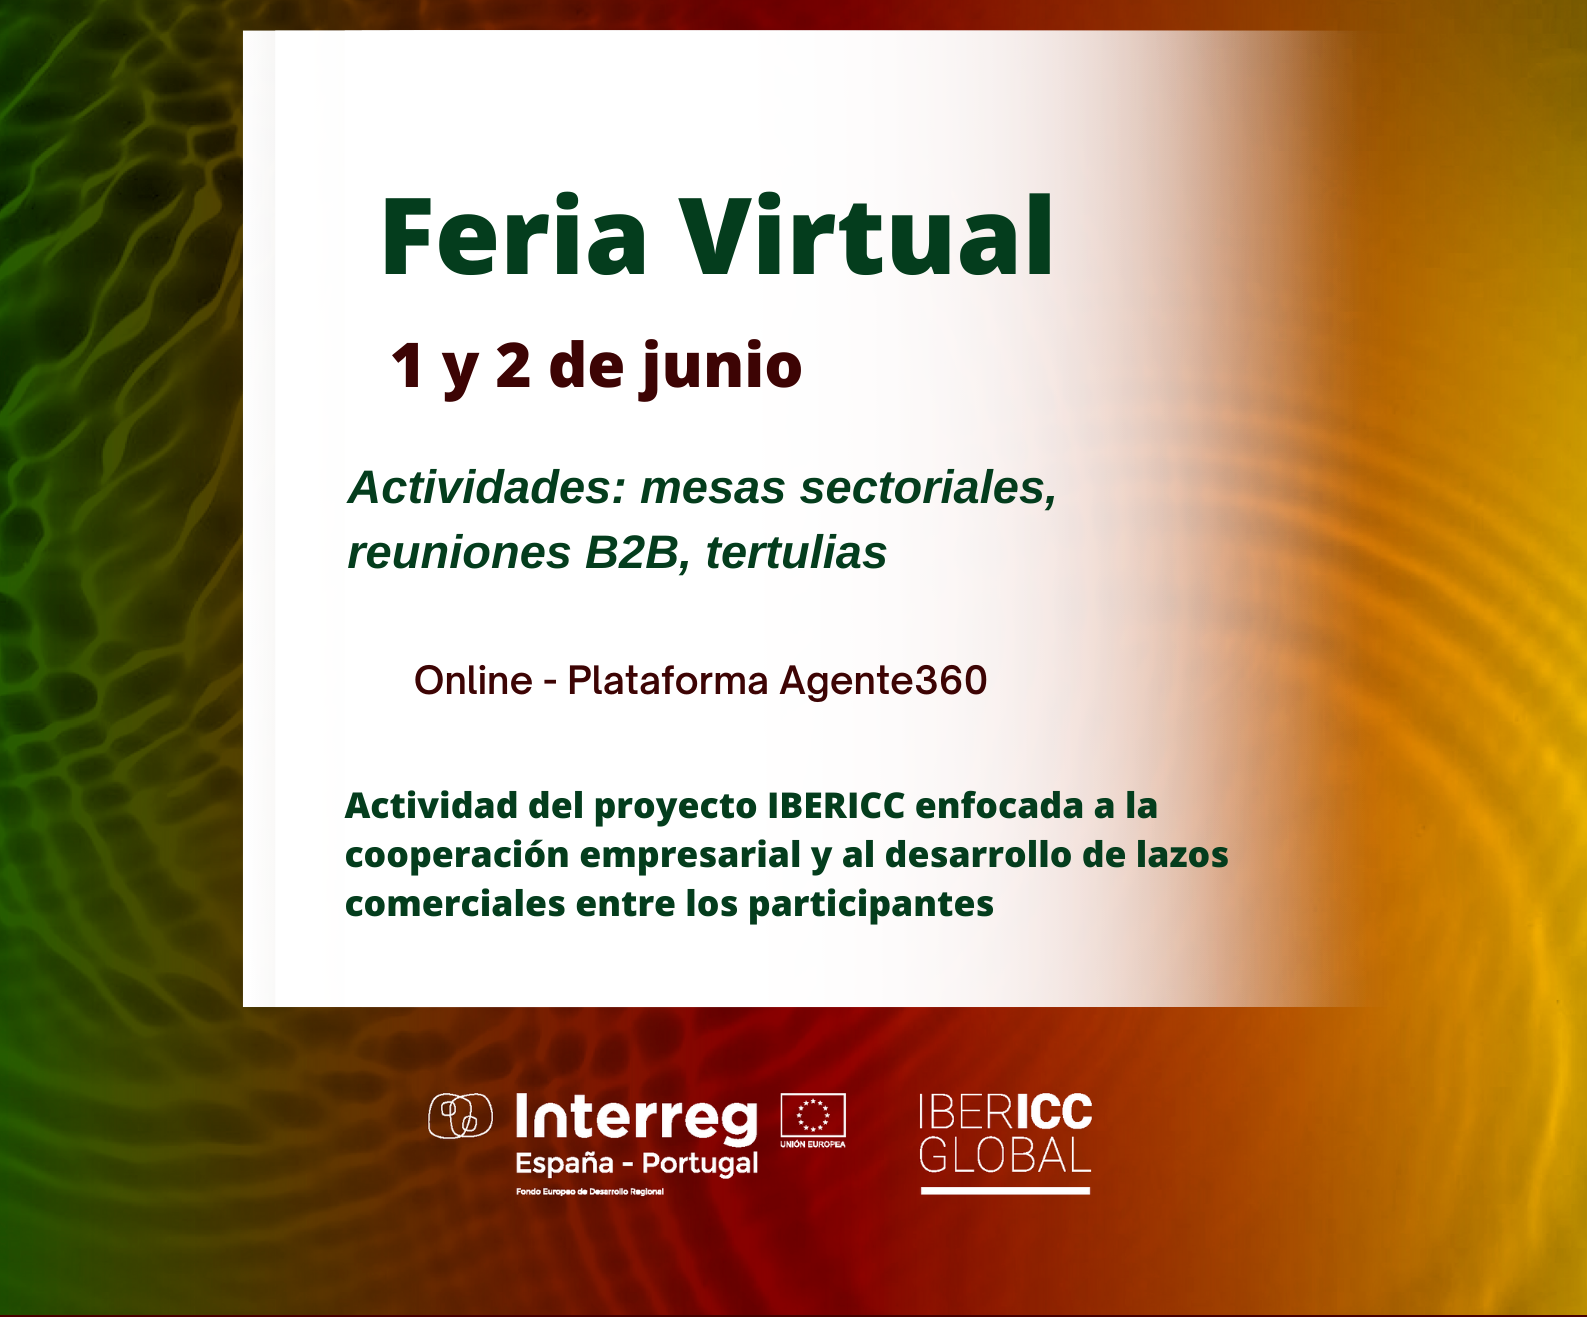 Feria Virtual: IBERICC GLOBAL